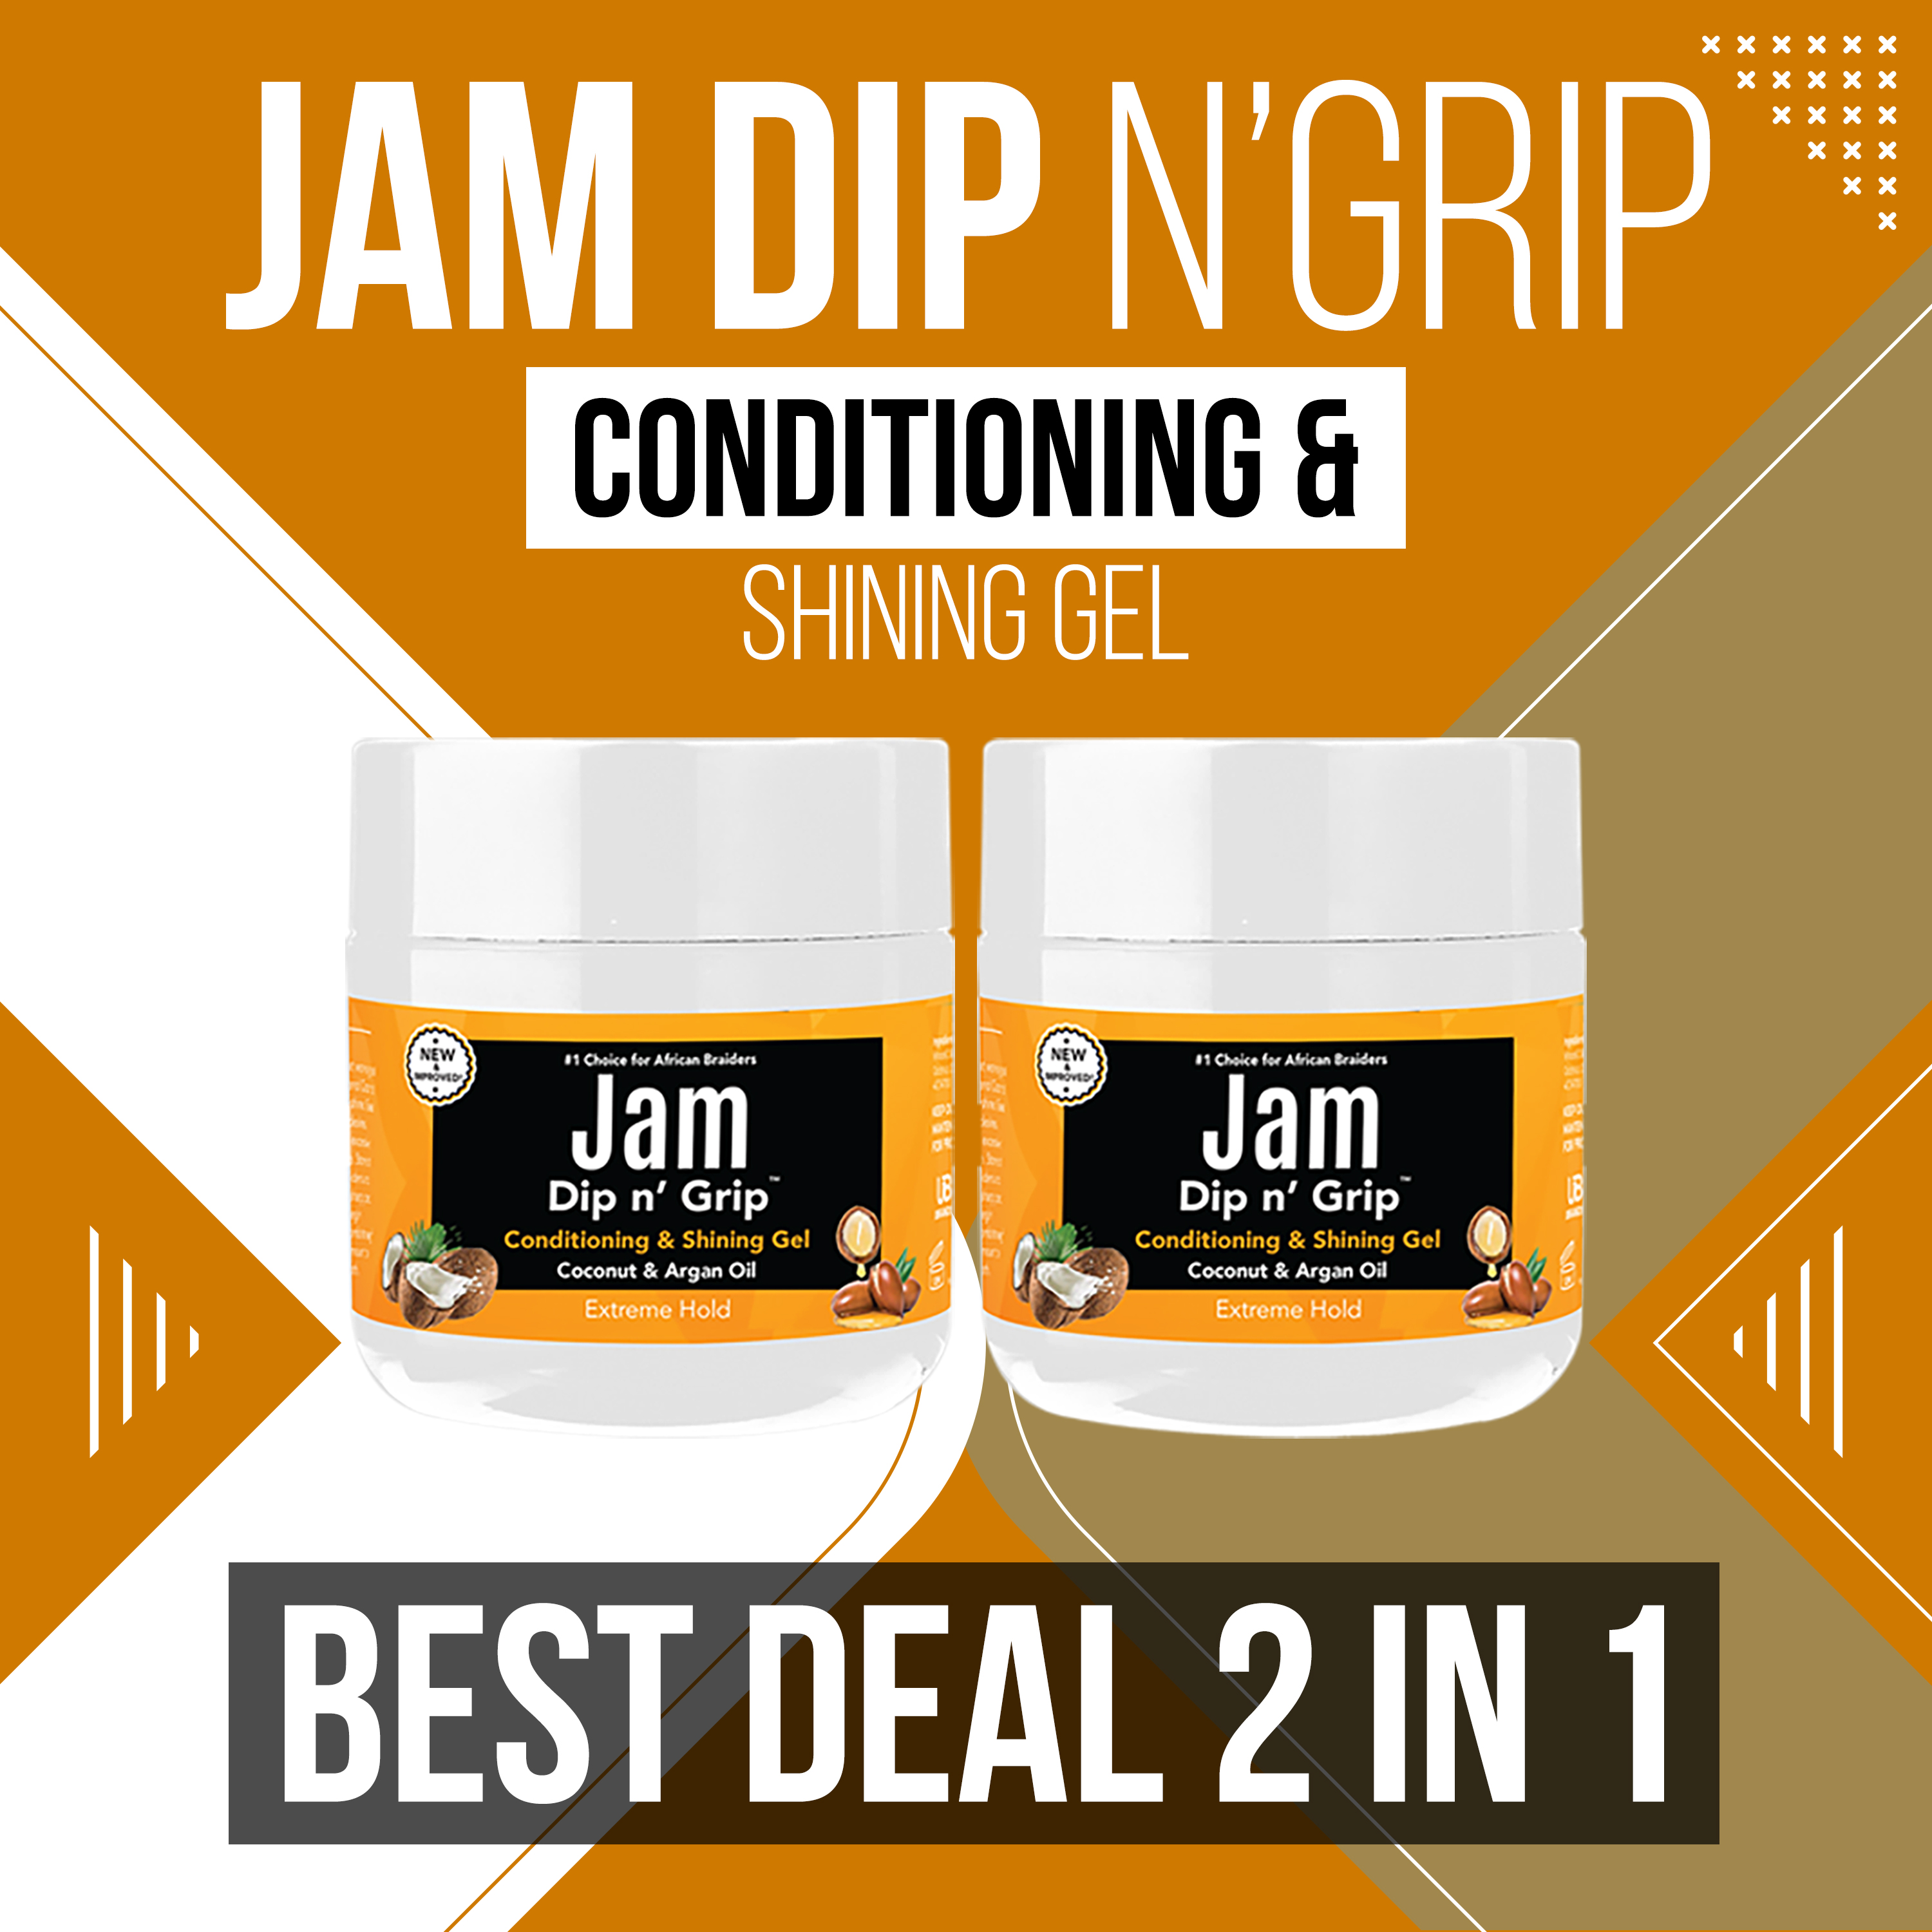 Jam Dip n Grip Coconut and Argan Oil Clarifying Hair Styling Gel 4oz (2 Pack) - Unisex - image 2 of 6